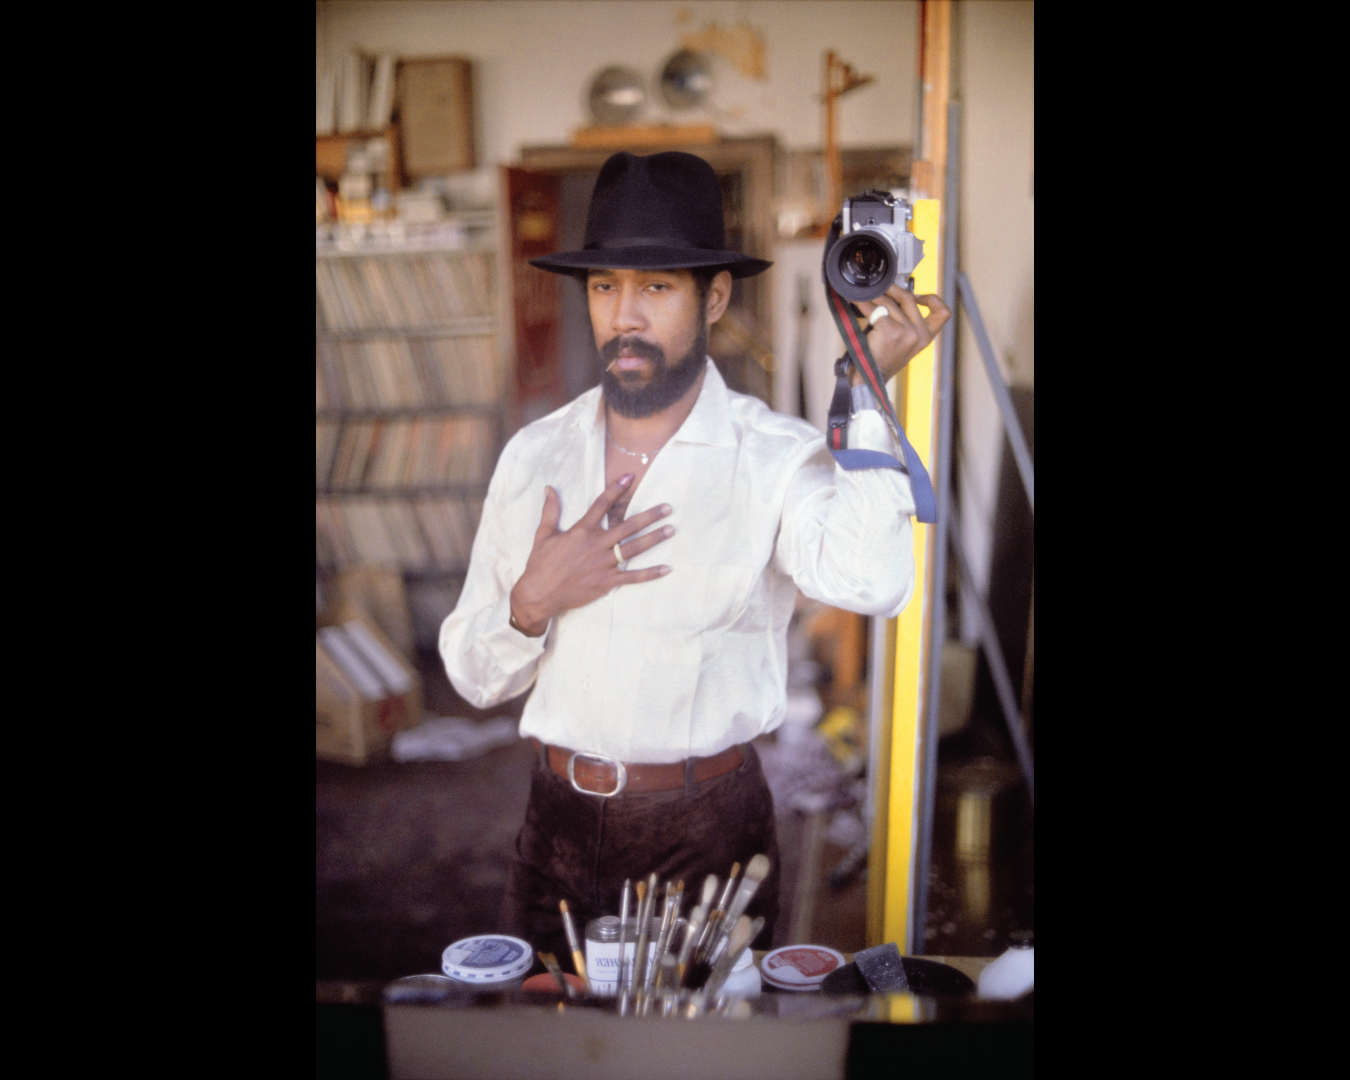 Self-portrait of artist Barkley Hendricks wearing a black hat and holding a camera